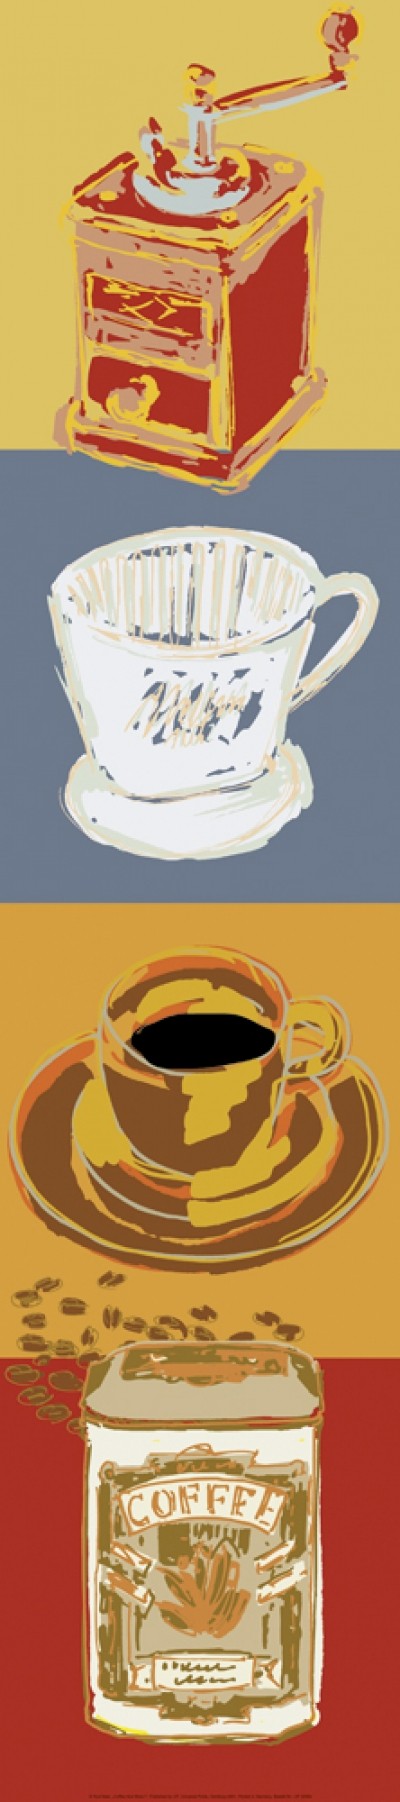 Rod Neer, Coffee And More I (Kaffee, Filter, Kaffeefilter, Melitta, Kaffeemühle, Kaffeedose, Pop/Op Art, Pop Art, Kult, Vintage, Wohnzimmer, Küche, Esszimmer, Treppenhaus, bunt)